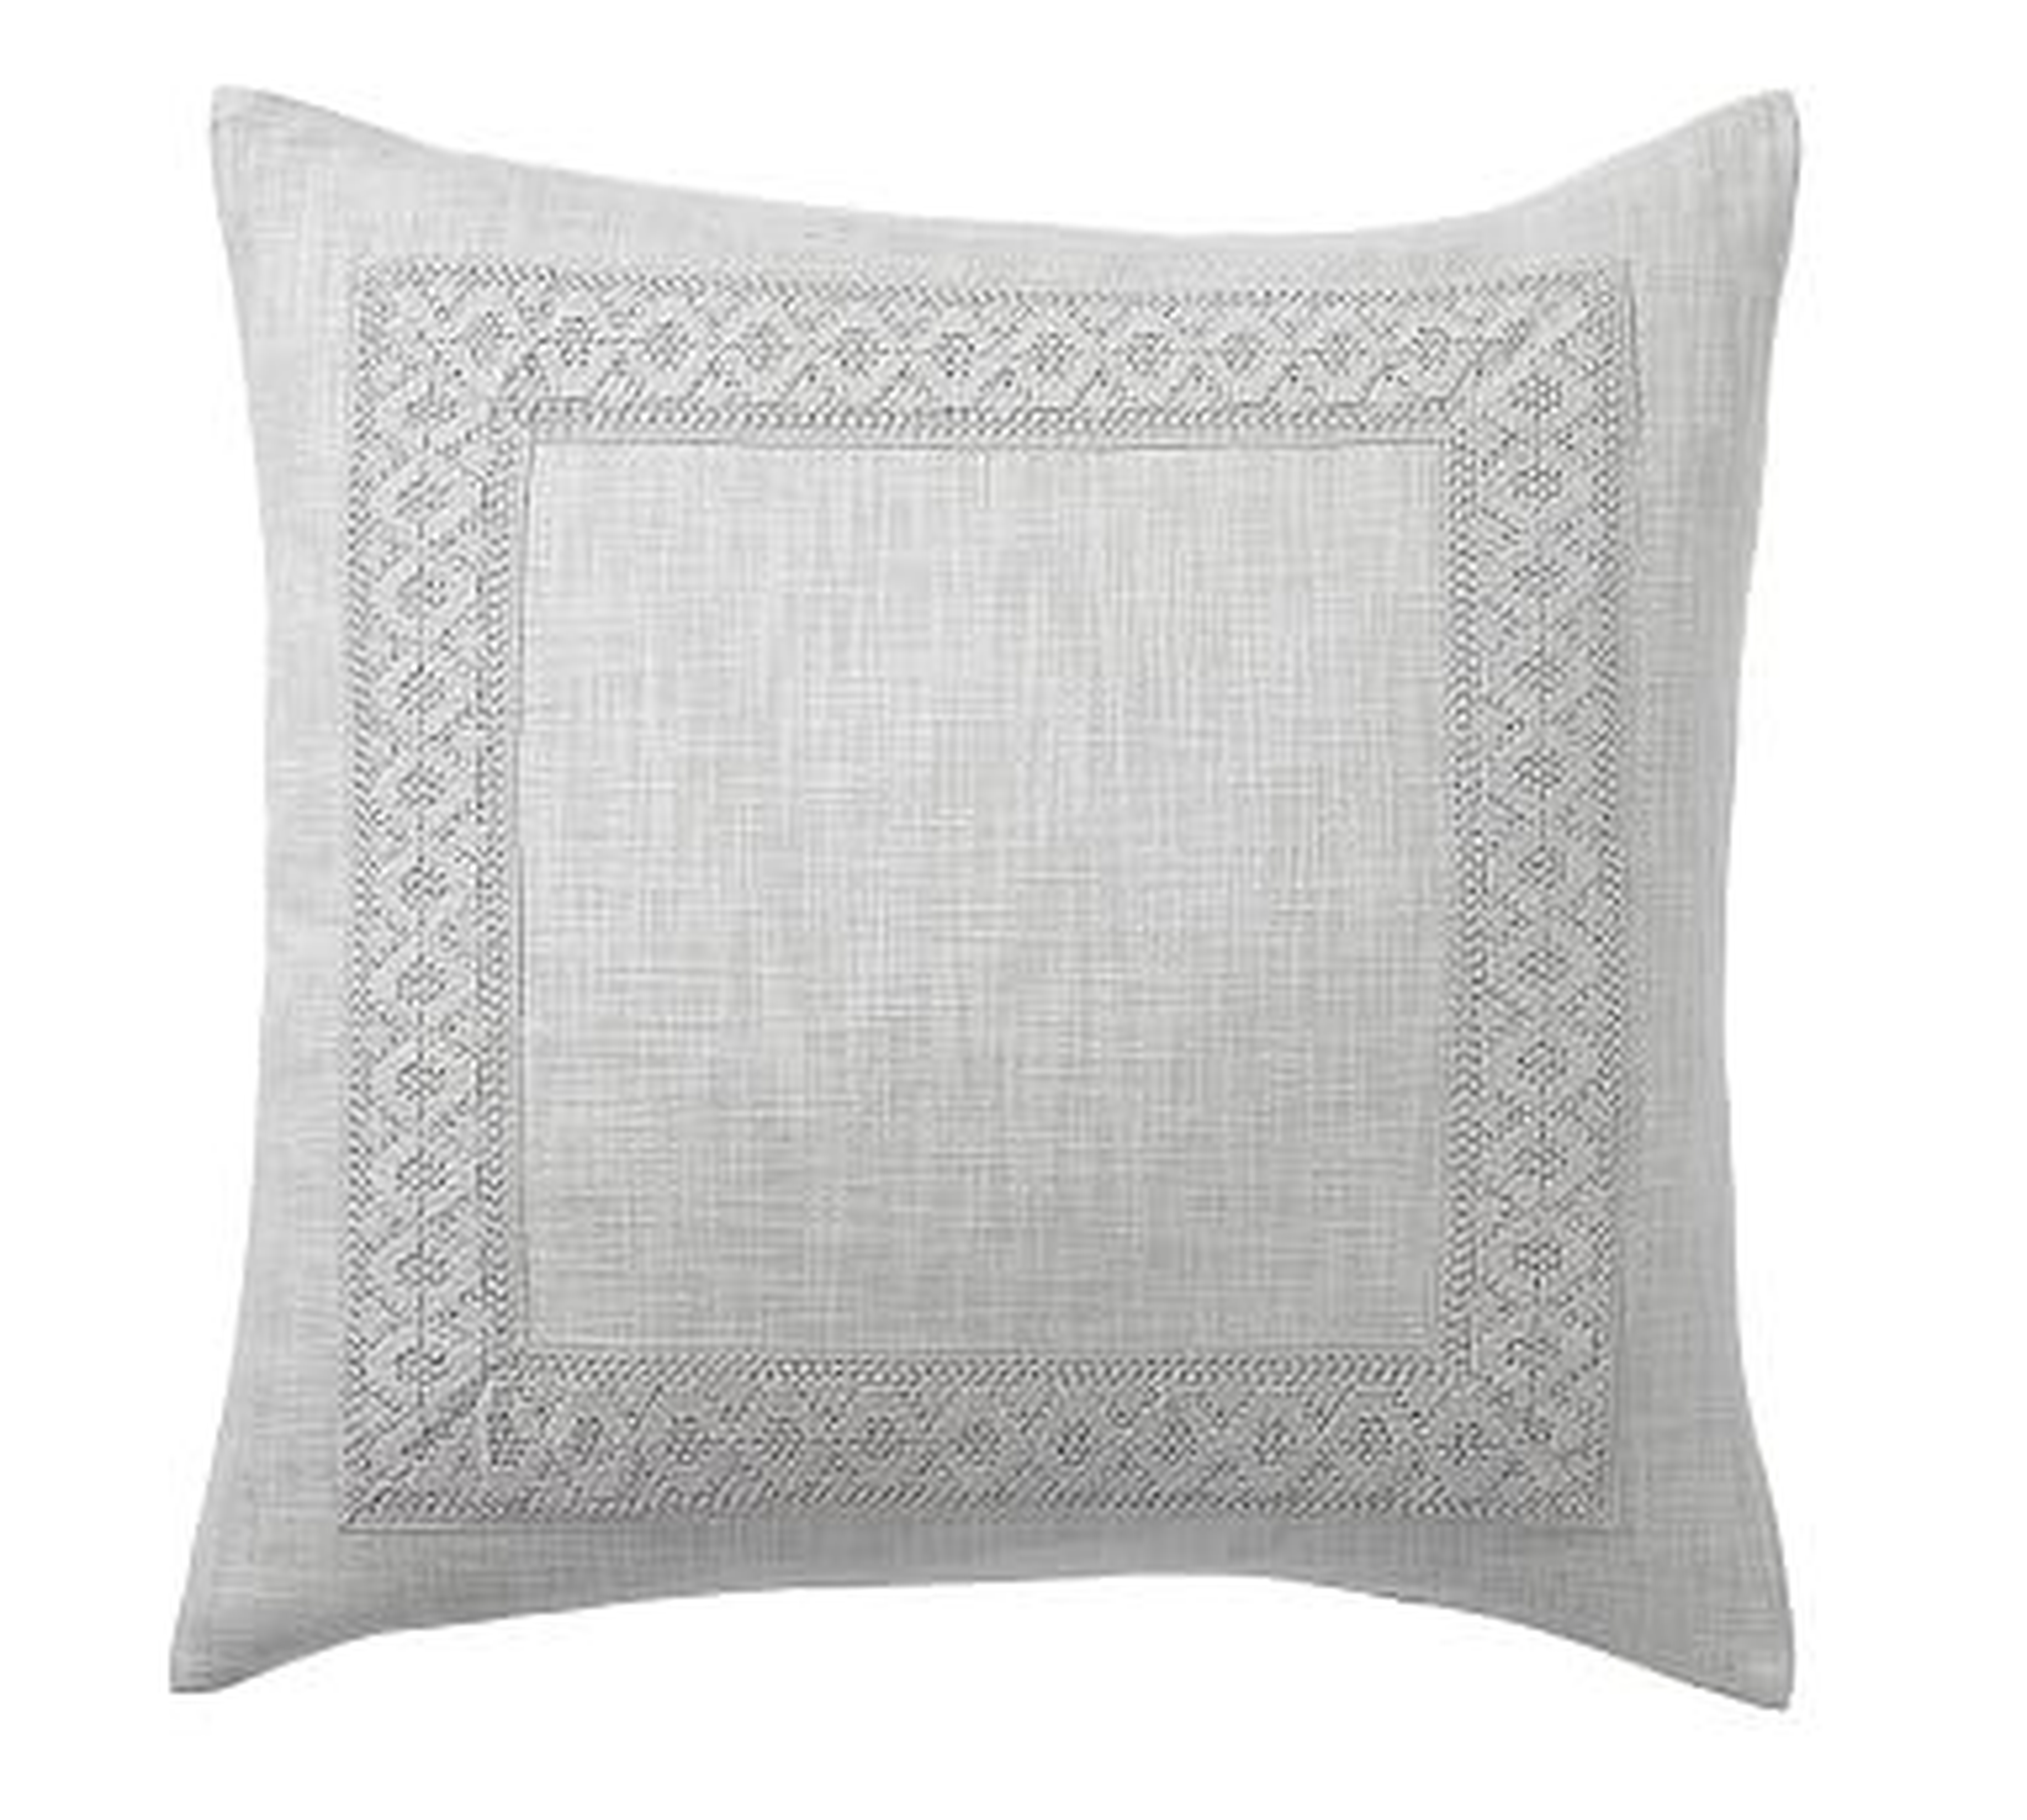 Farrah Embroidered Pillow Cover, 22", Smoke - Pottery Barn